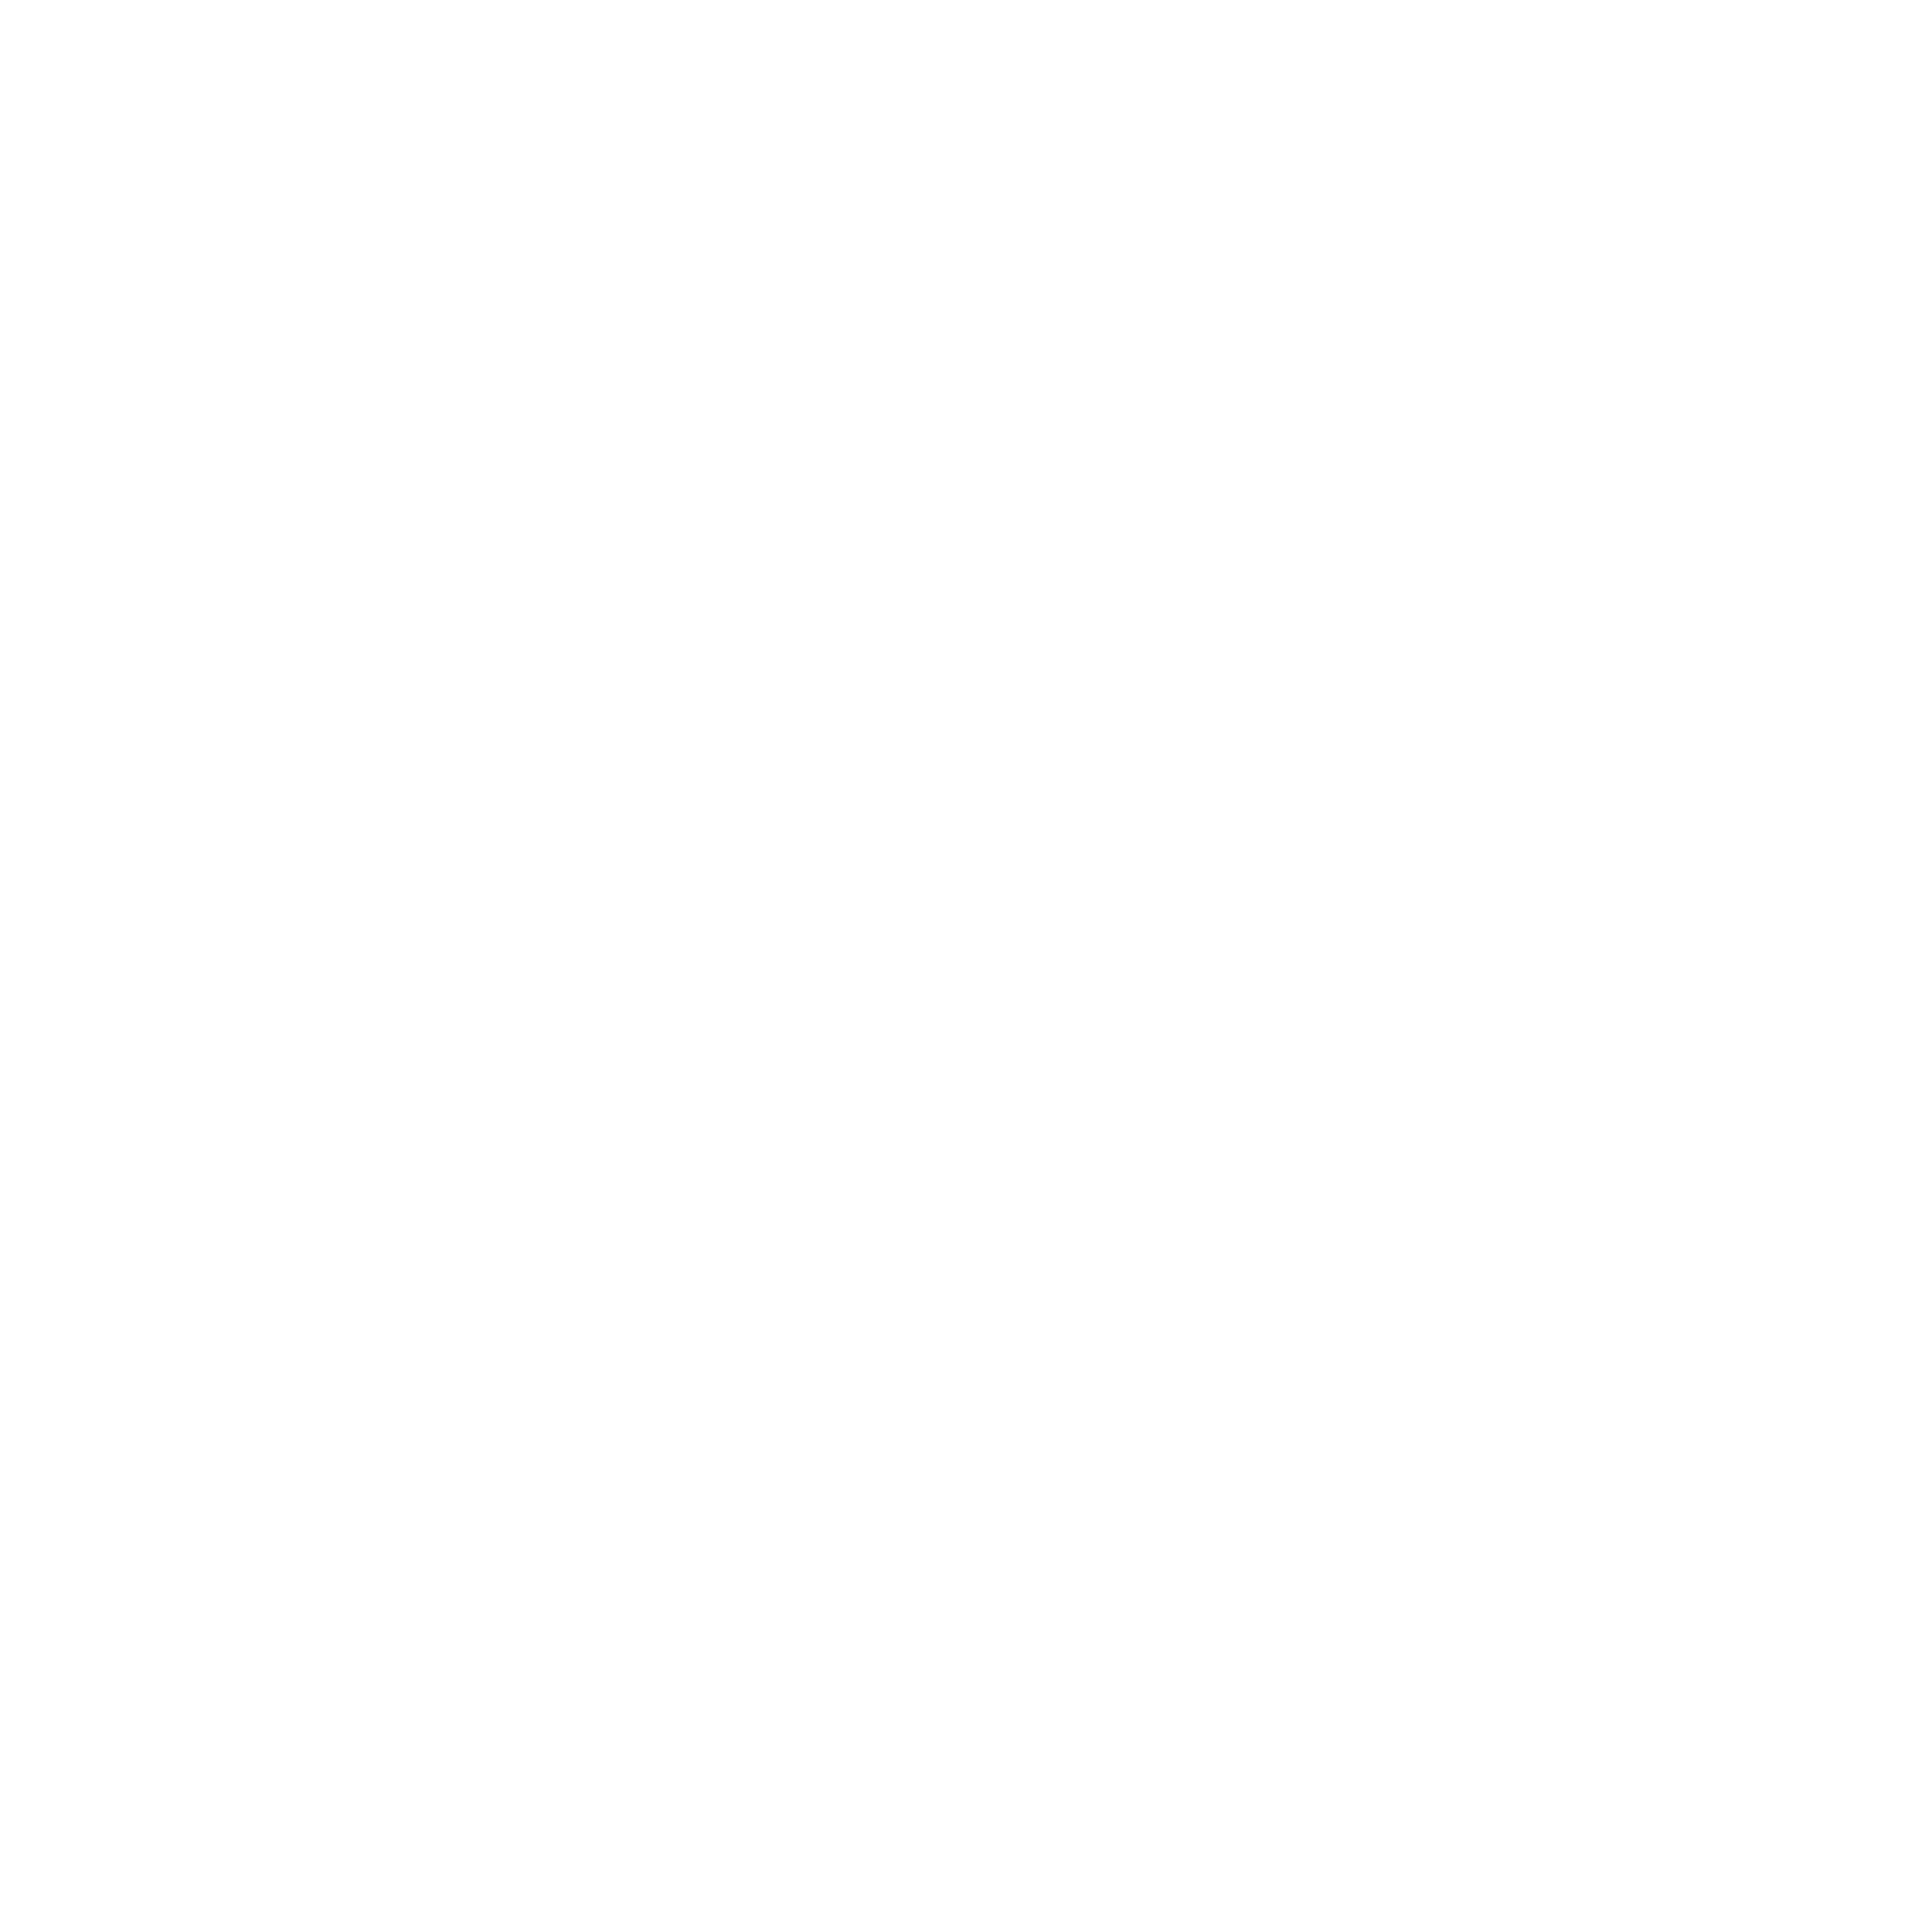 Roy Hicks Photography